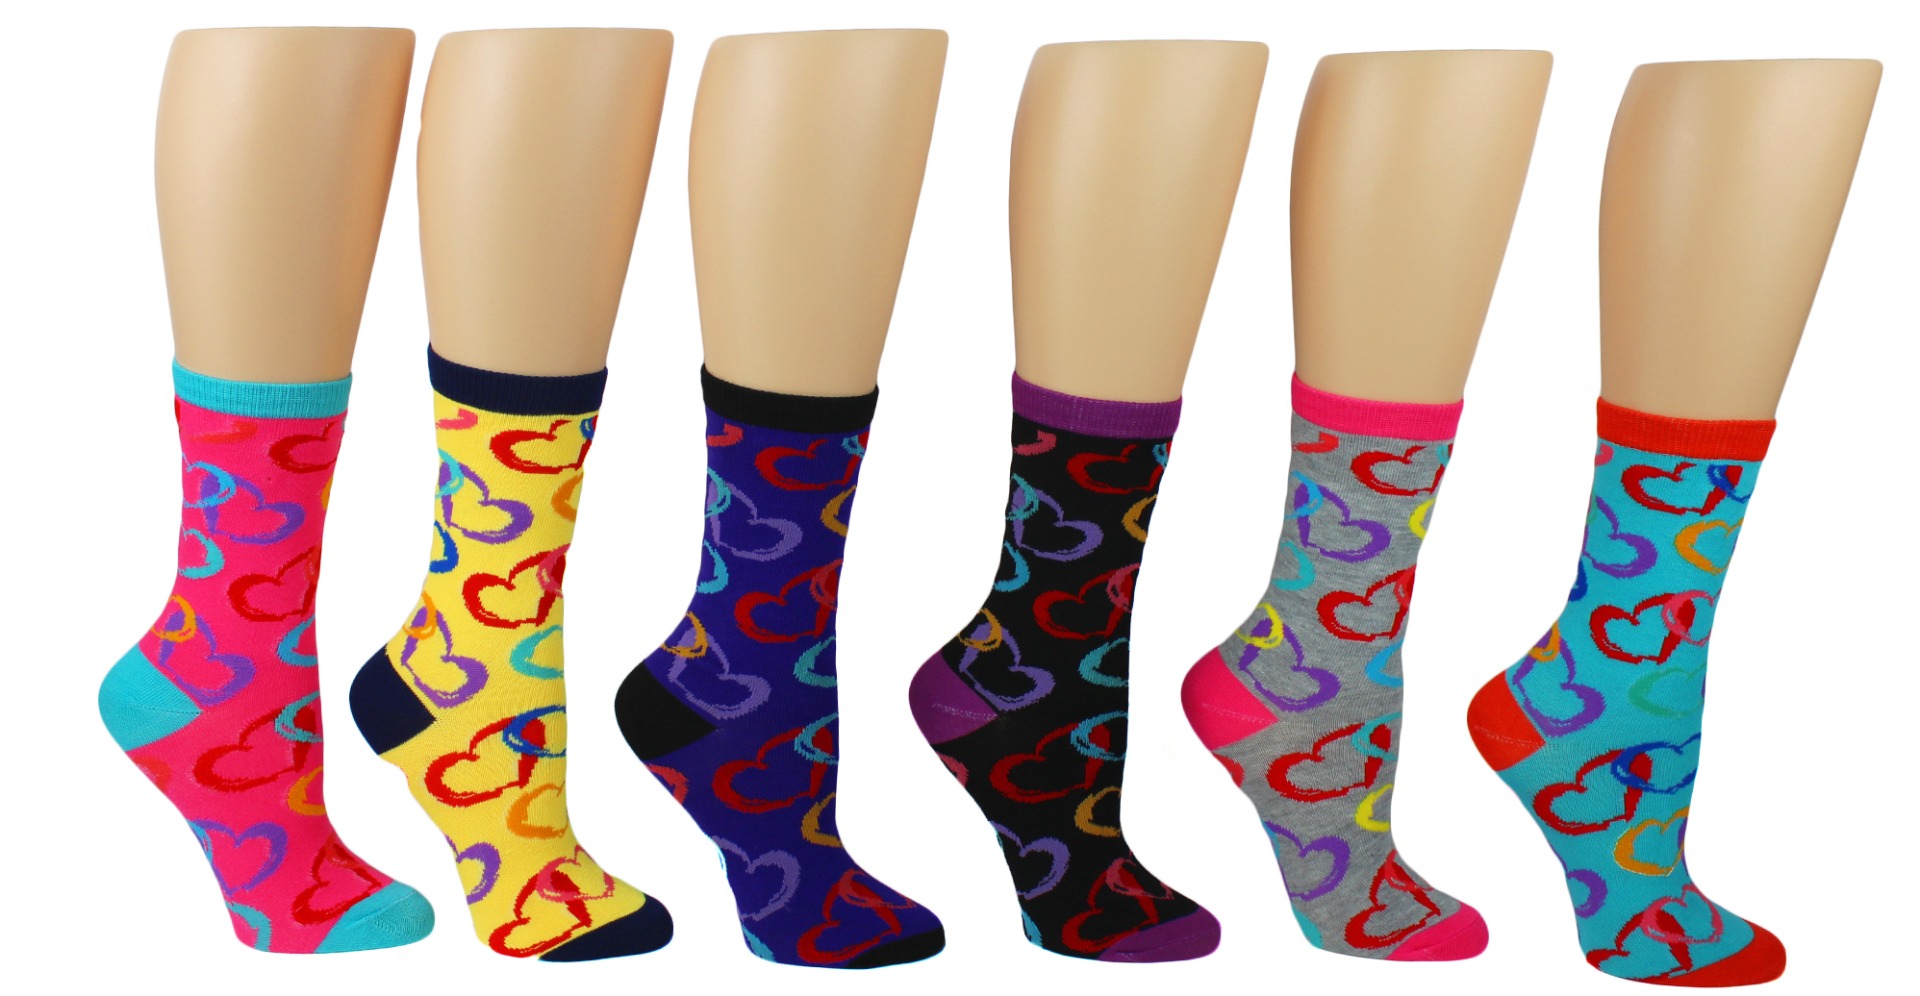 Women's Novelty Crew Socks - Heart Prints - Size 9-11